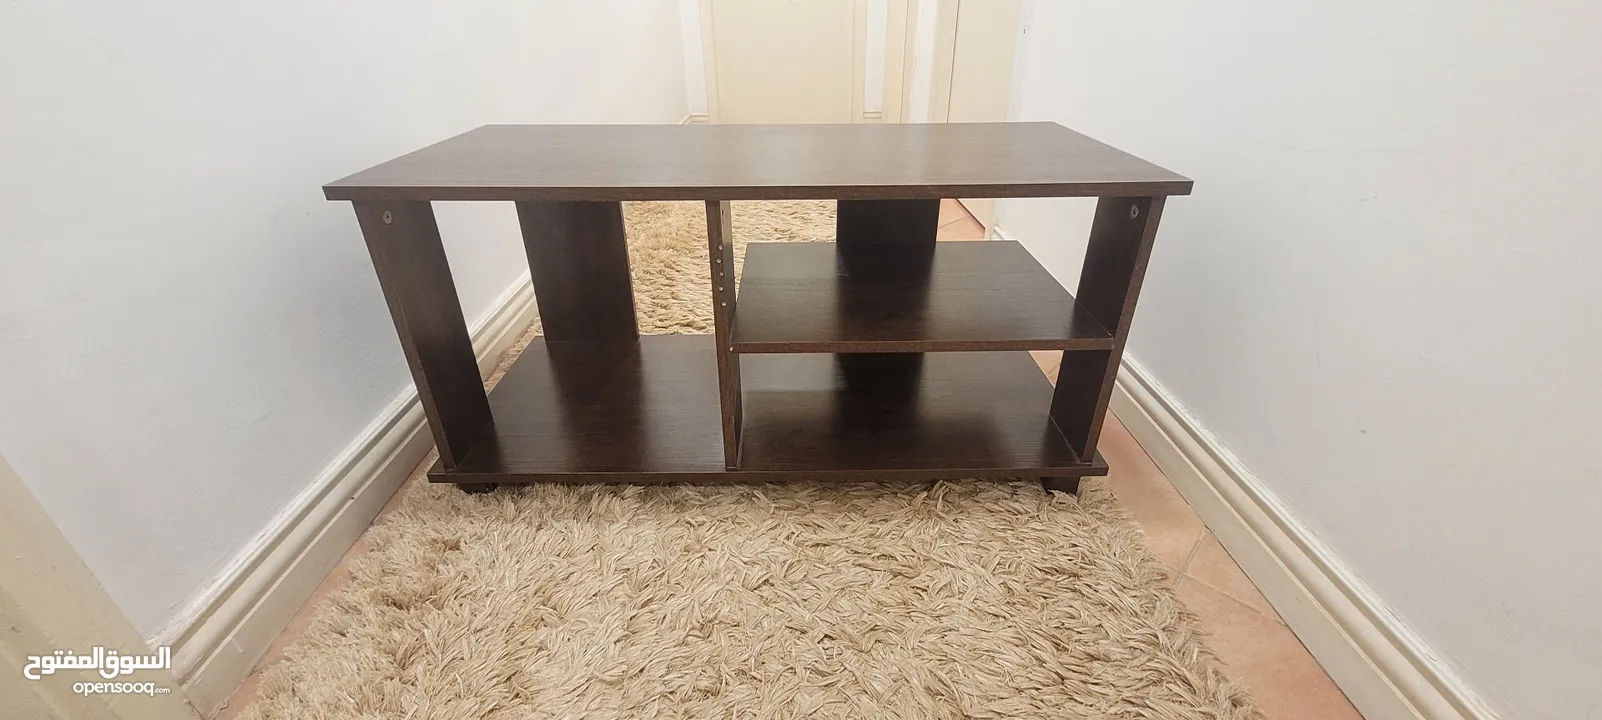 Wooden Table طاولة خشبية